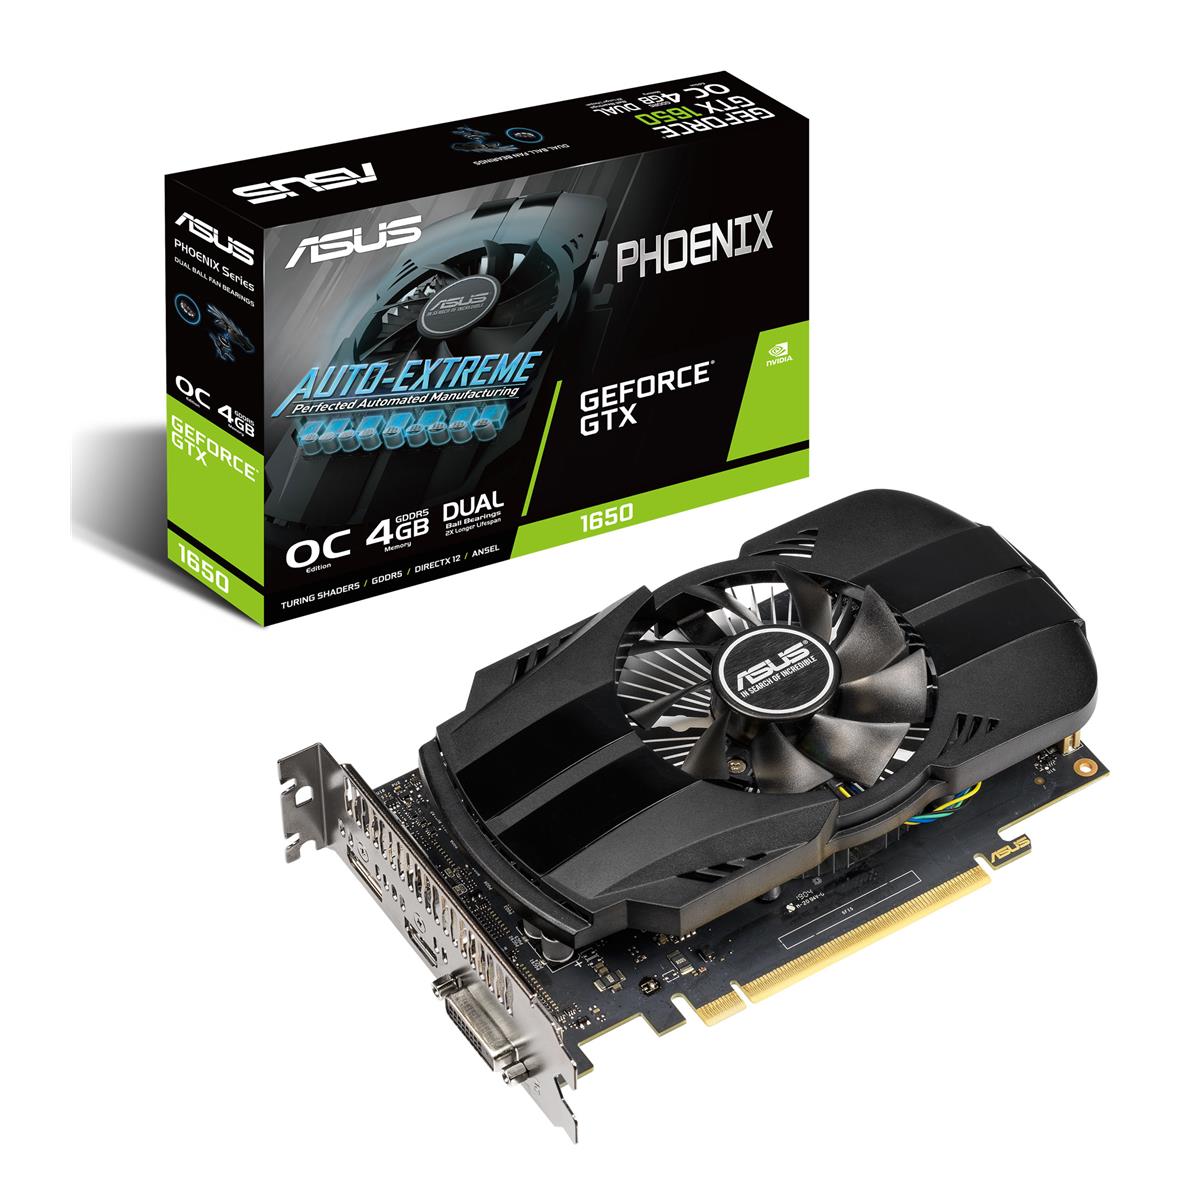 Image of ASUS Phoenix NVIDIA GeForce GTX 1650 OC Edition 4GB GDDR5 Gaming Graphics Card